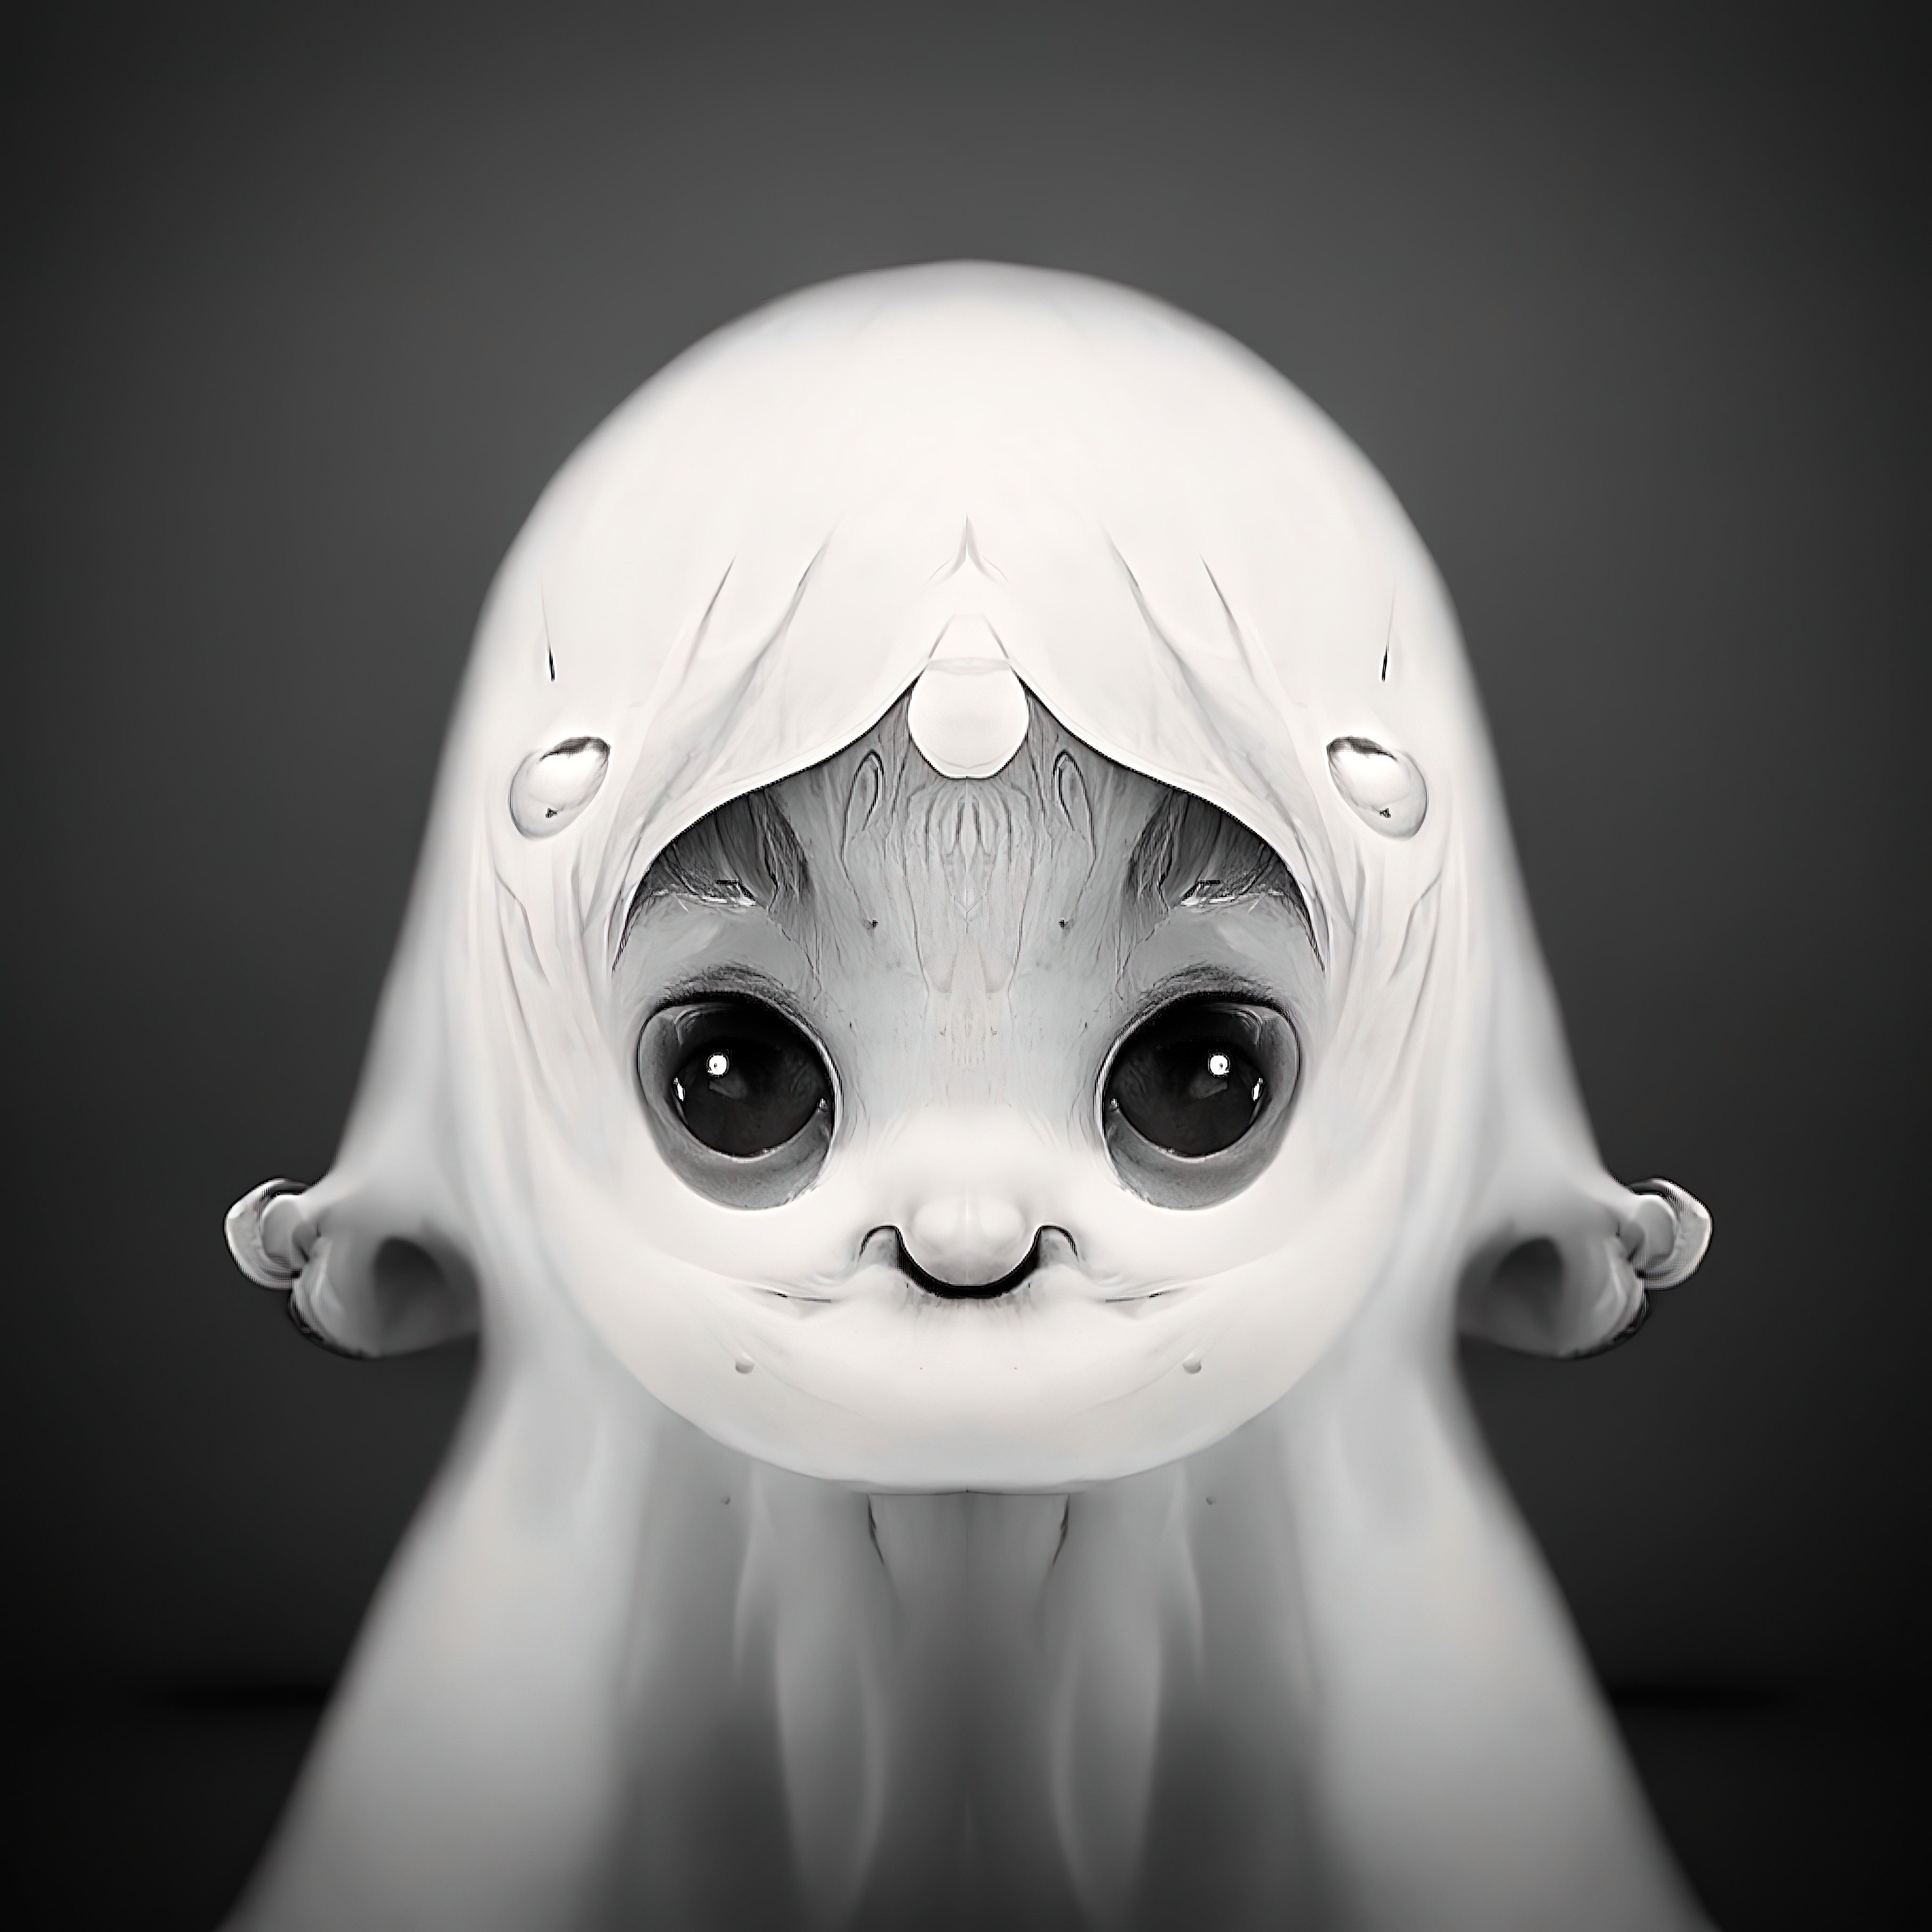 The Cute Ghostie